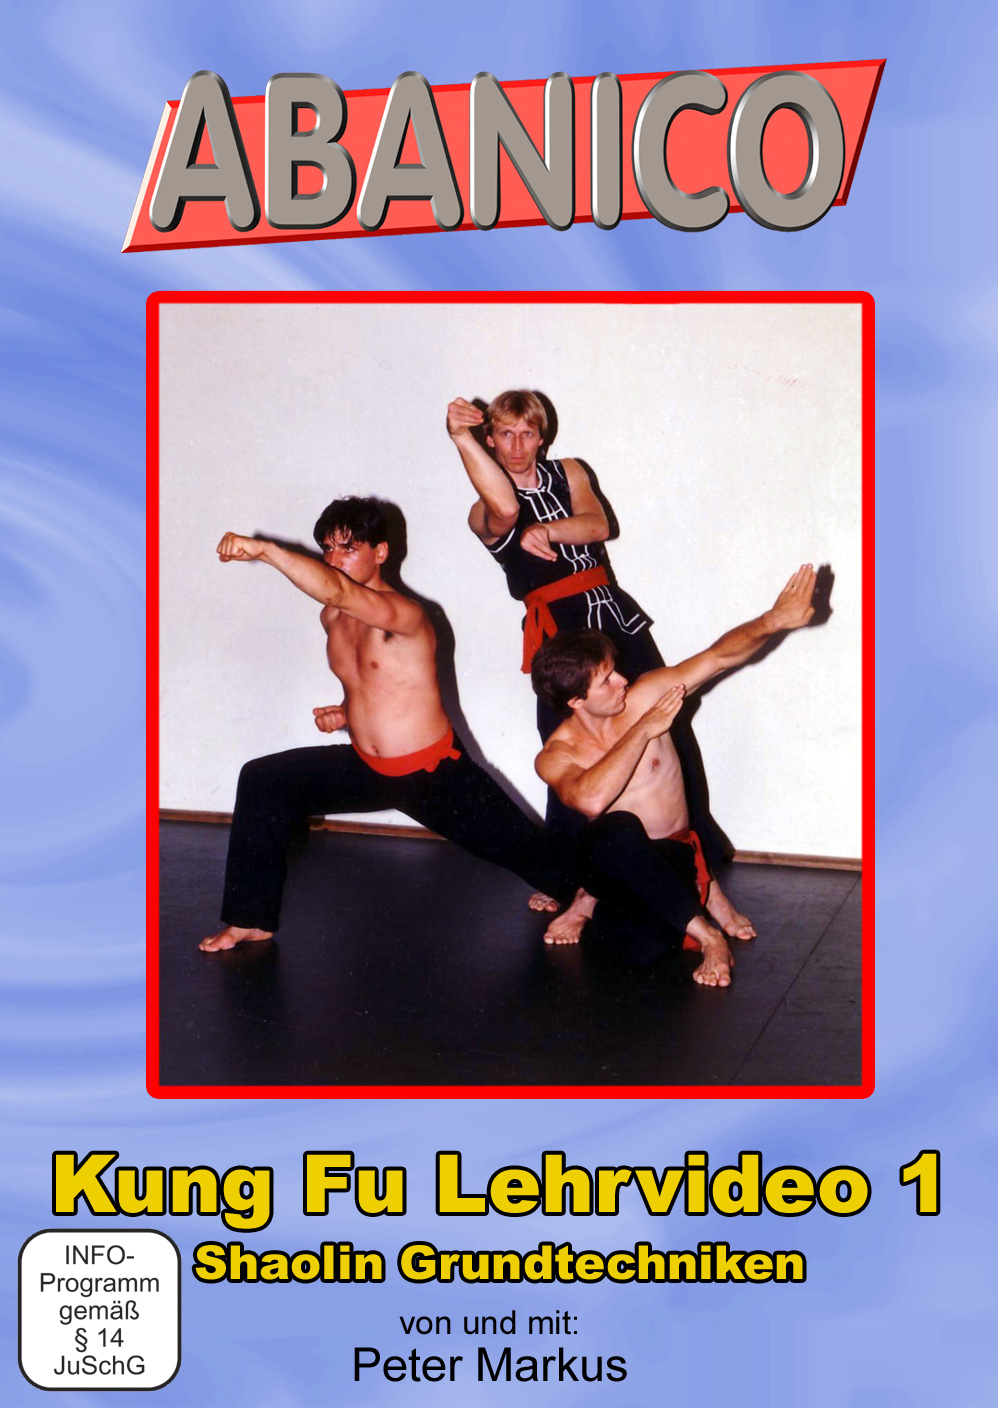 Kung Fu 1: Shaolin Grundtechnicken (Markus, Peter) DVD